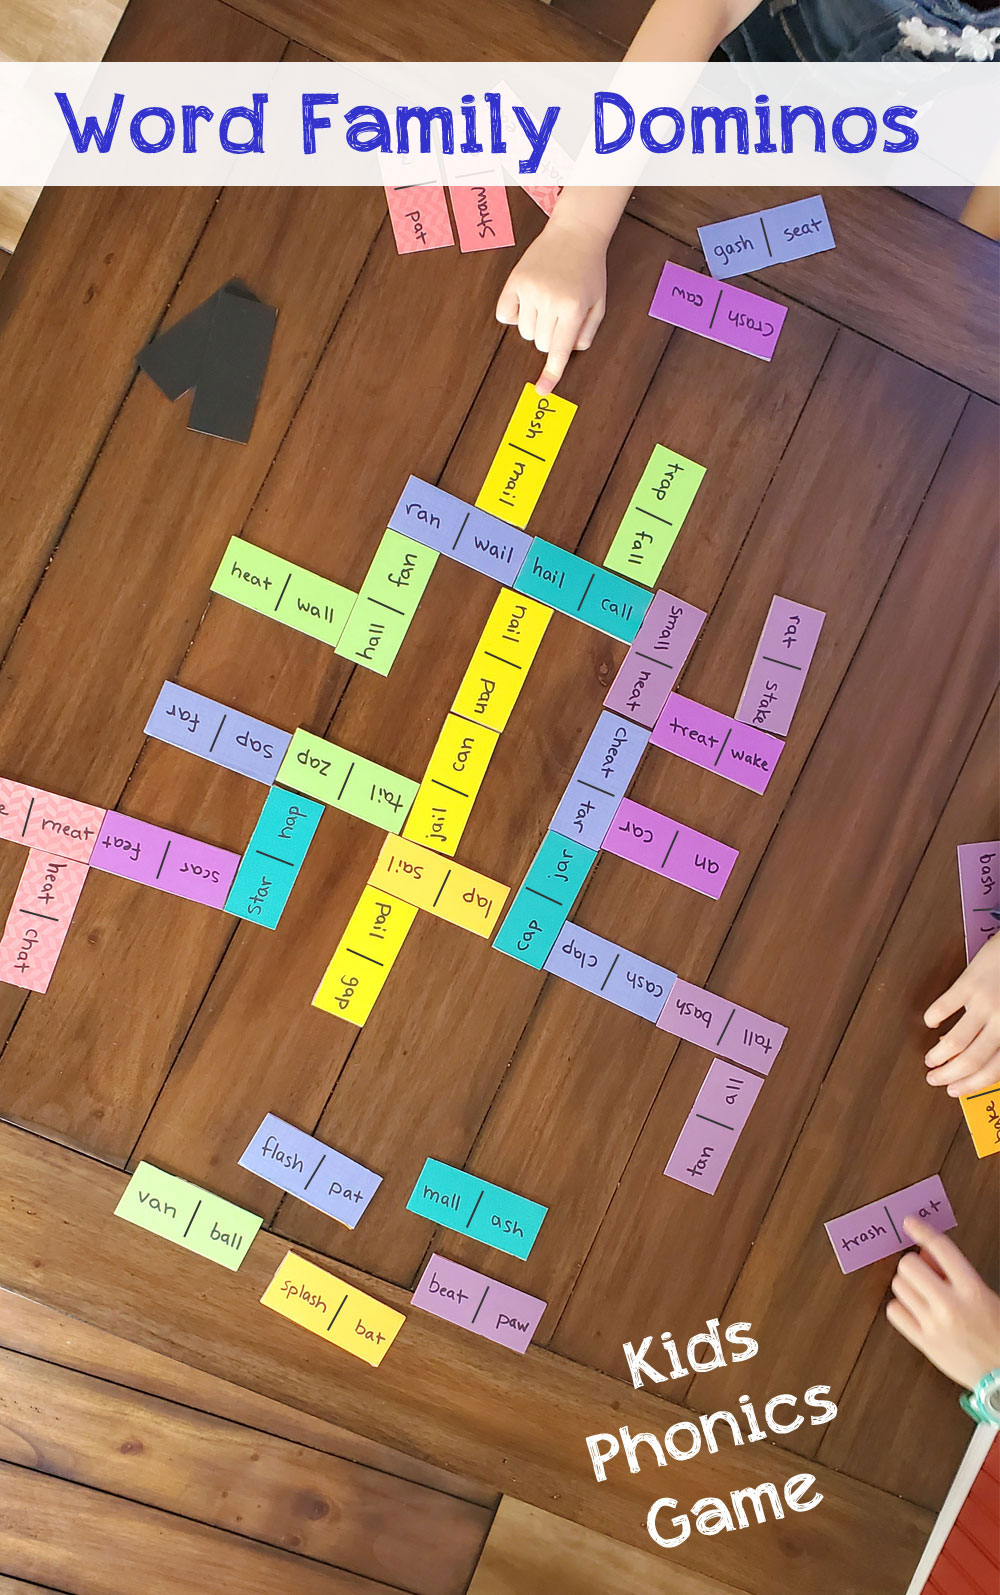 Word family dominoes kids phonics game for homeschool